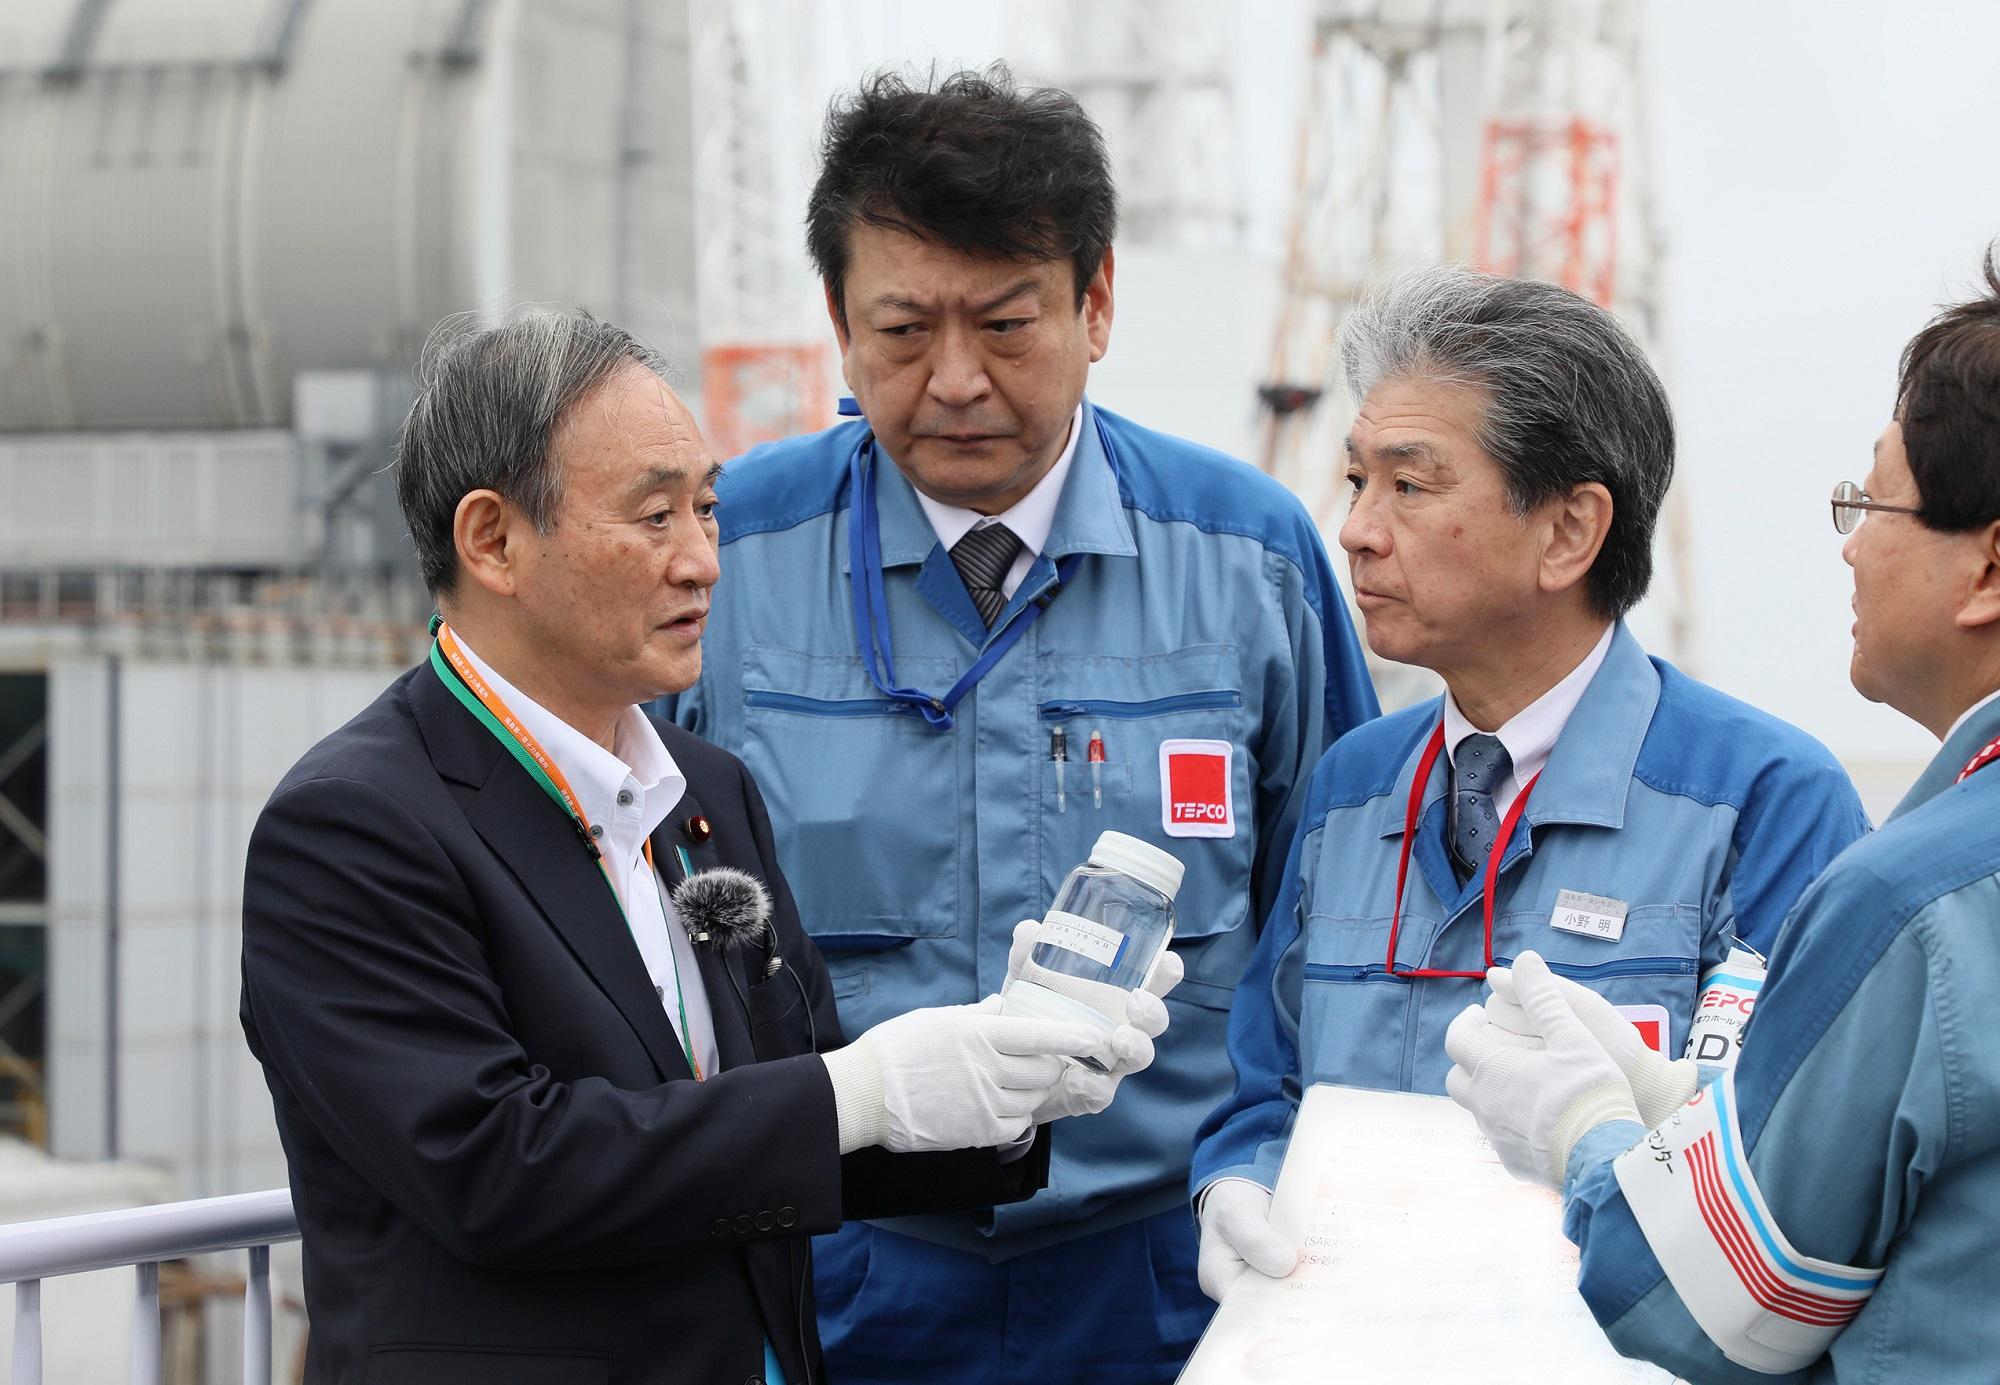 Prime Minister Sugo at Fukushima